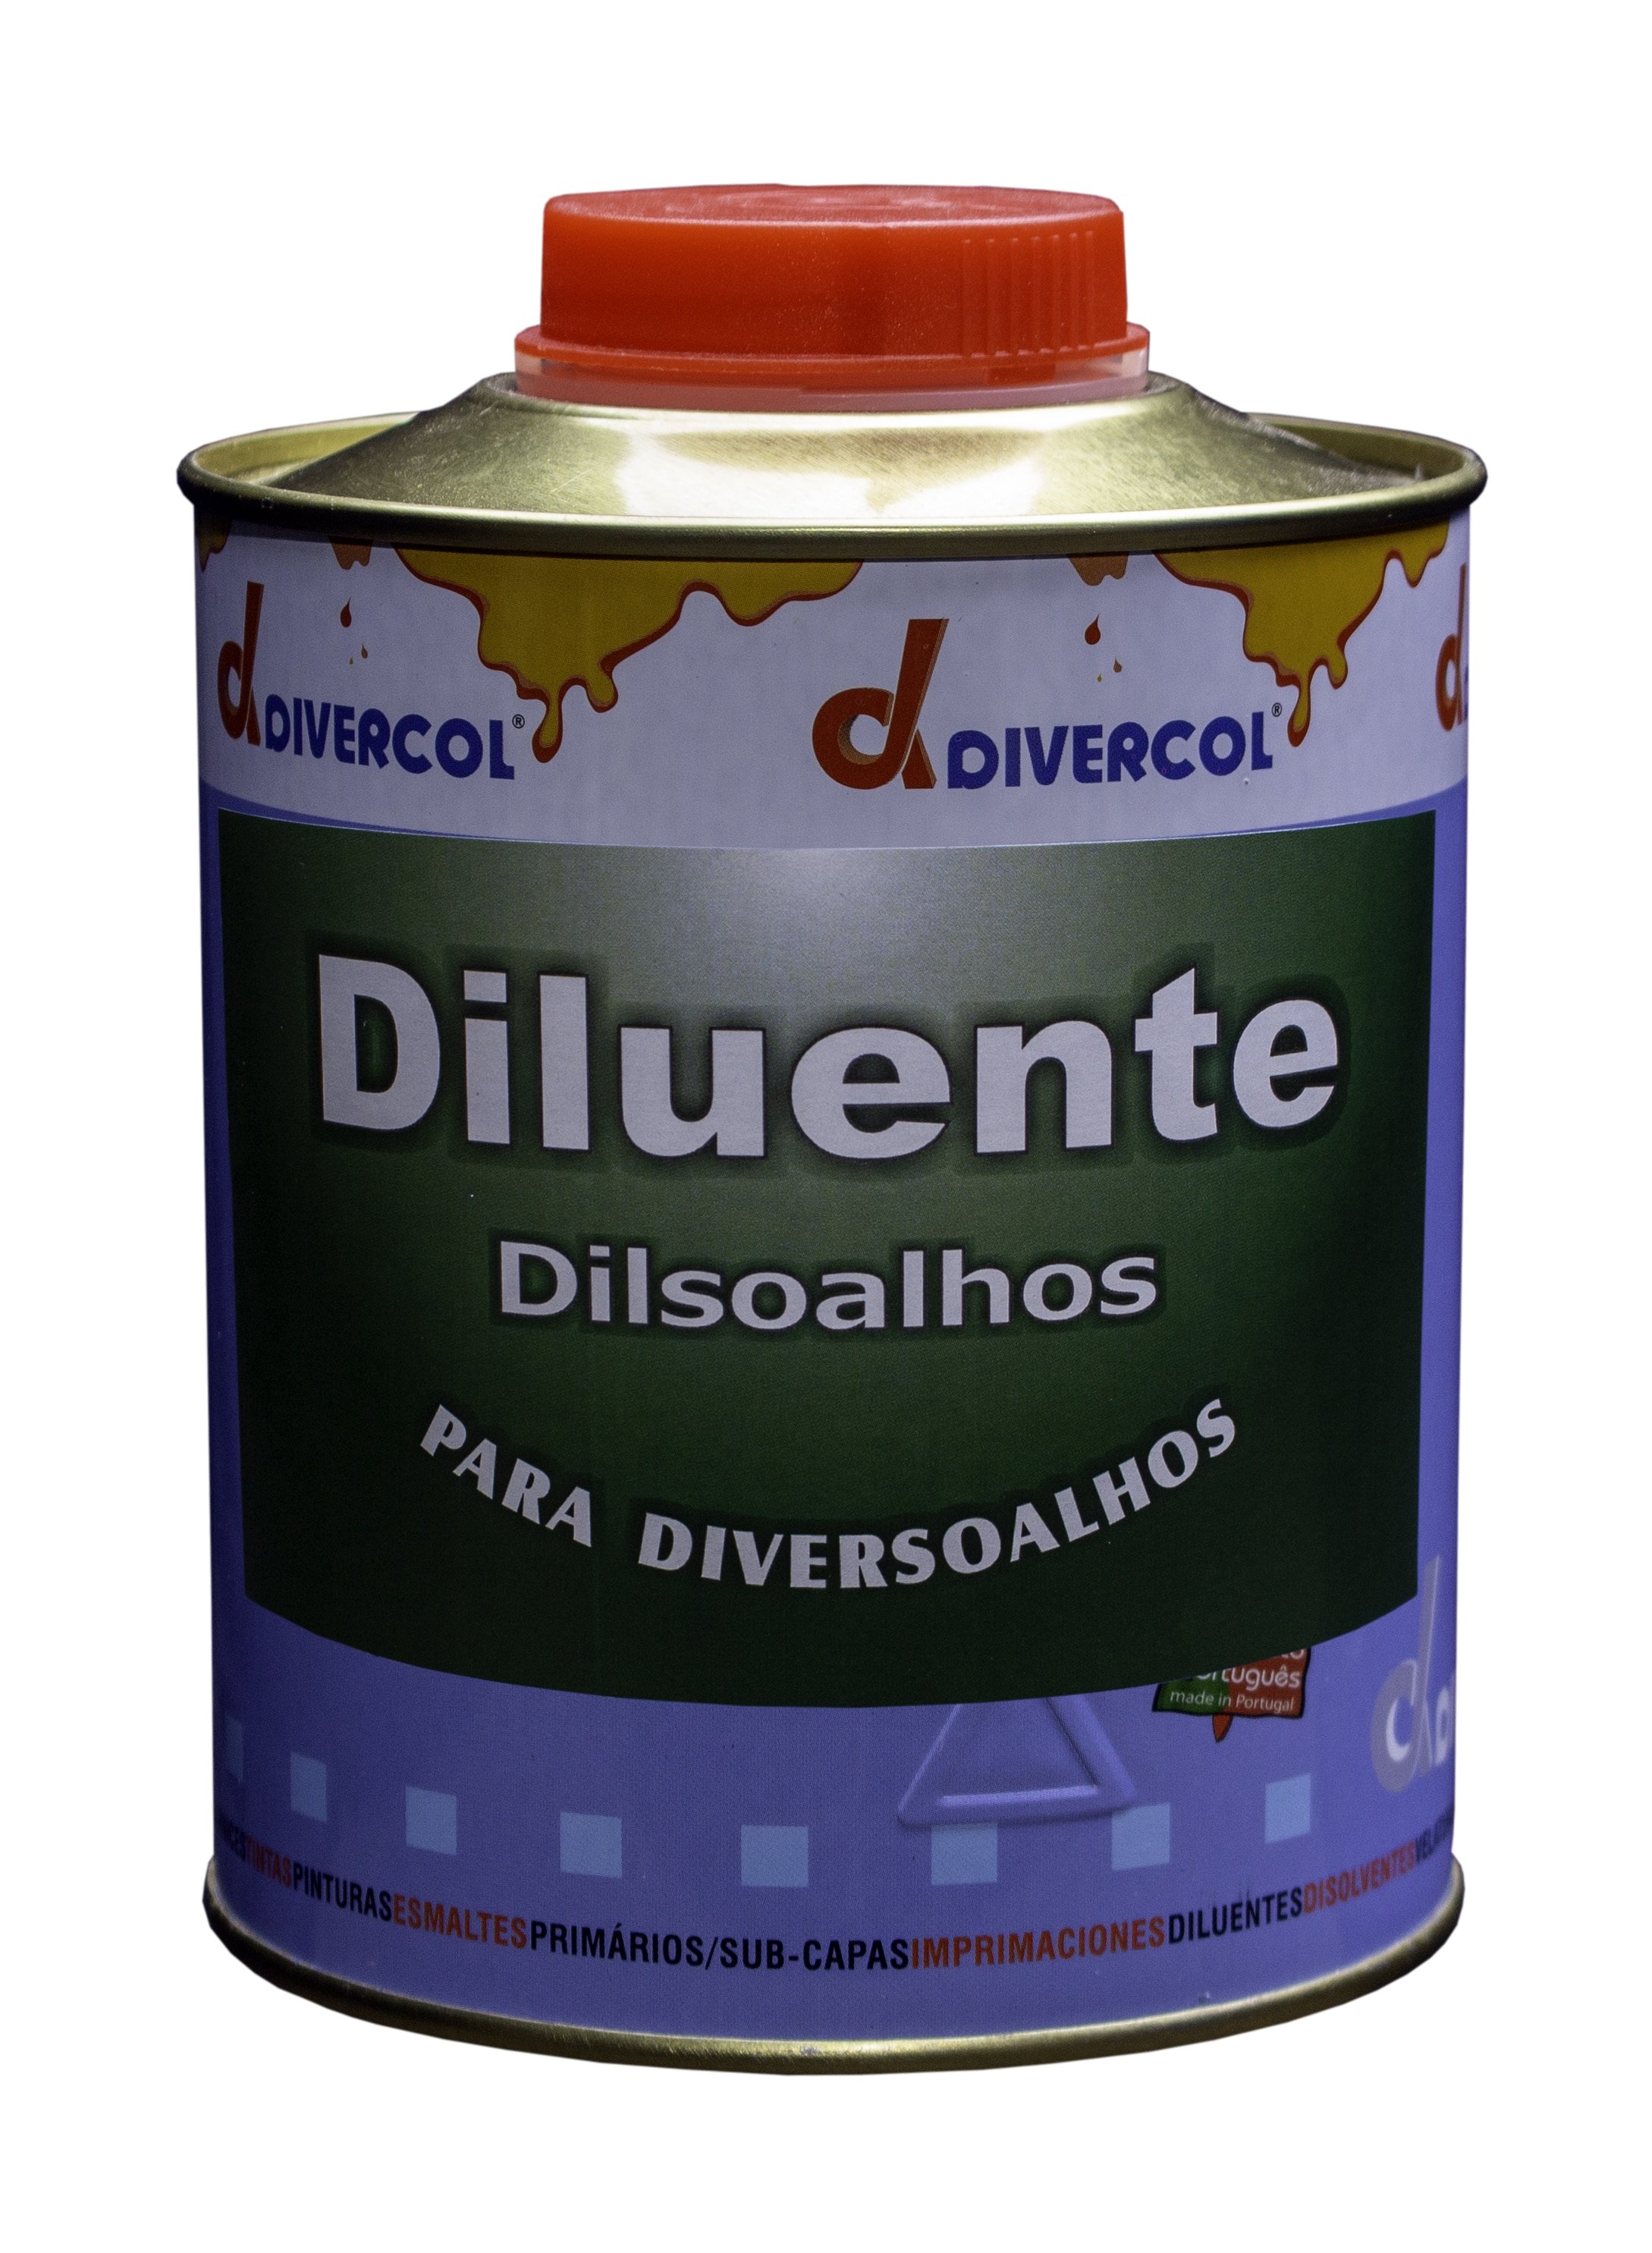 DIVERCOL - Diluente Dilsoalhos 0.75L